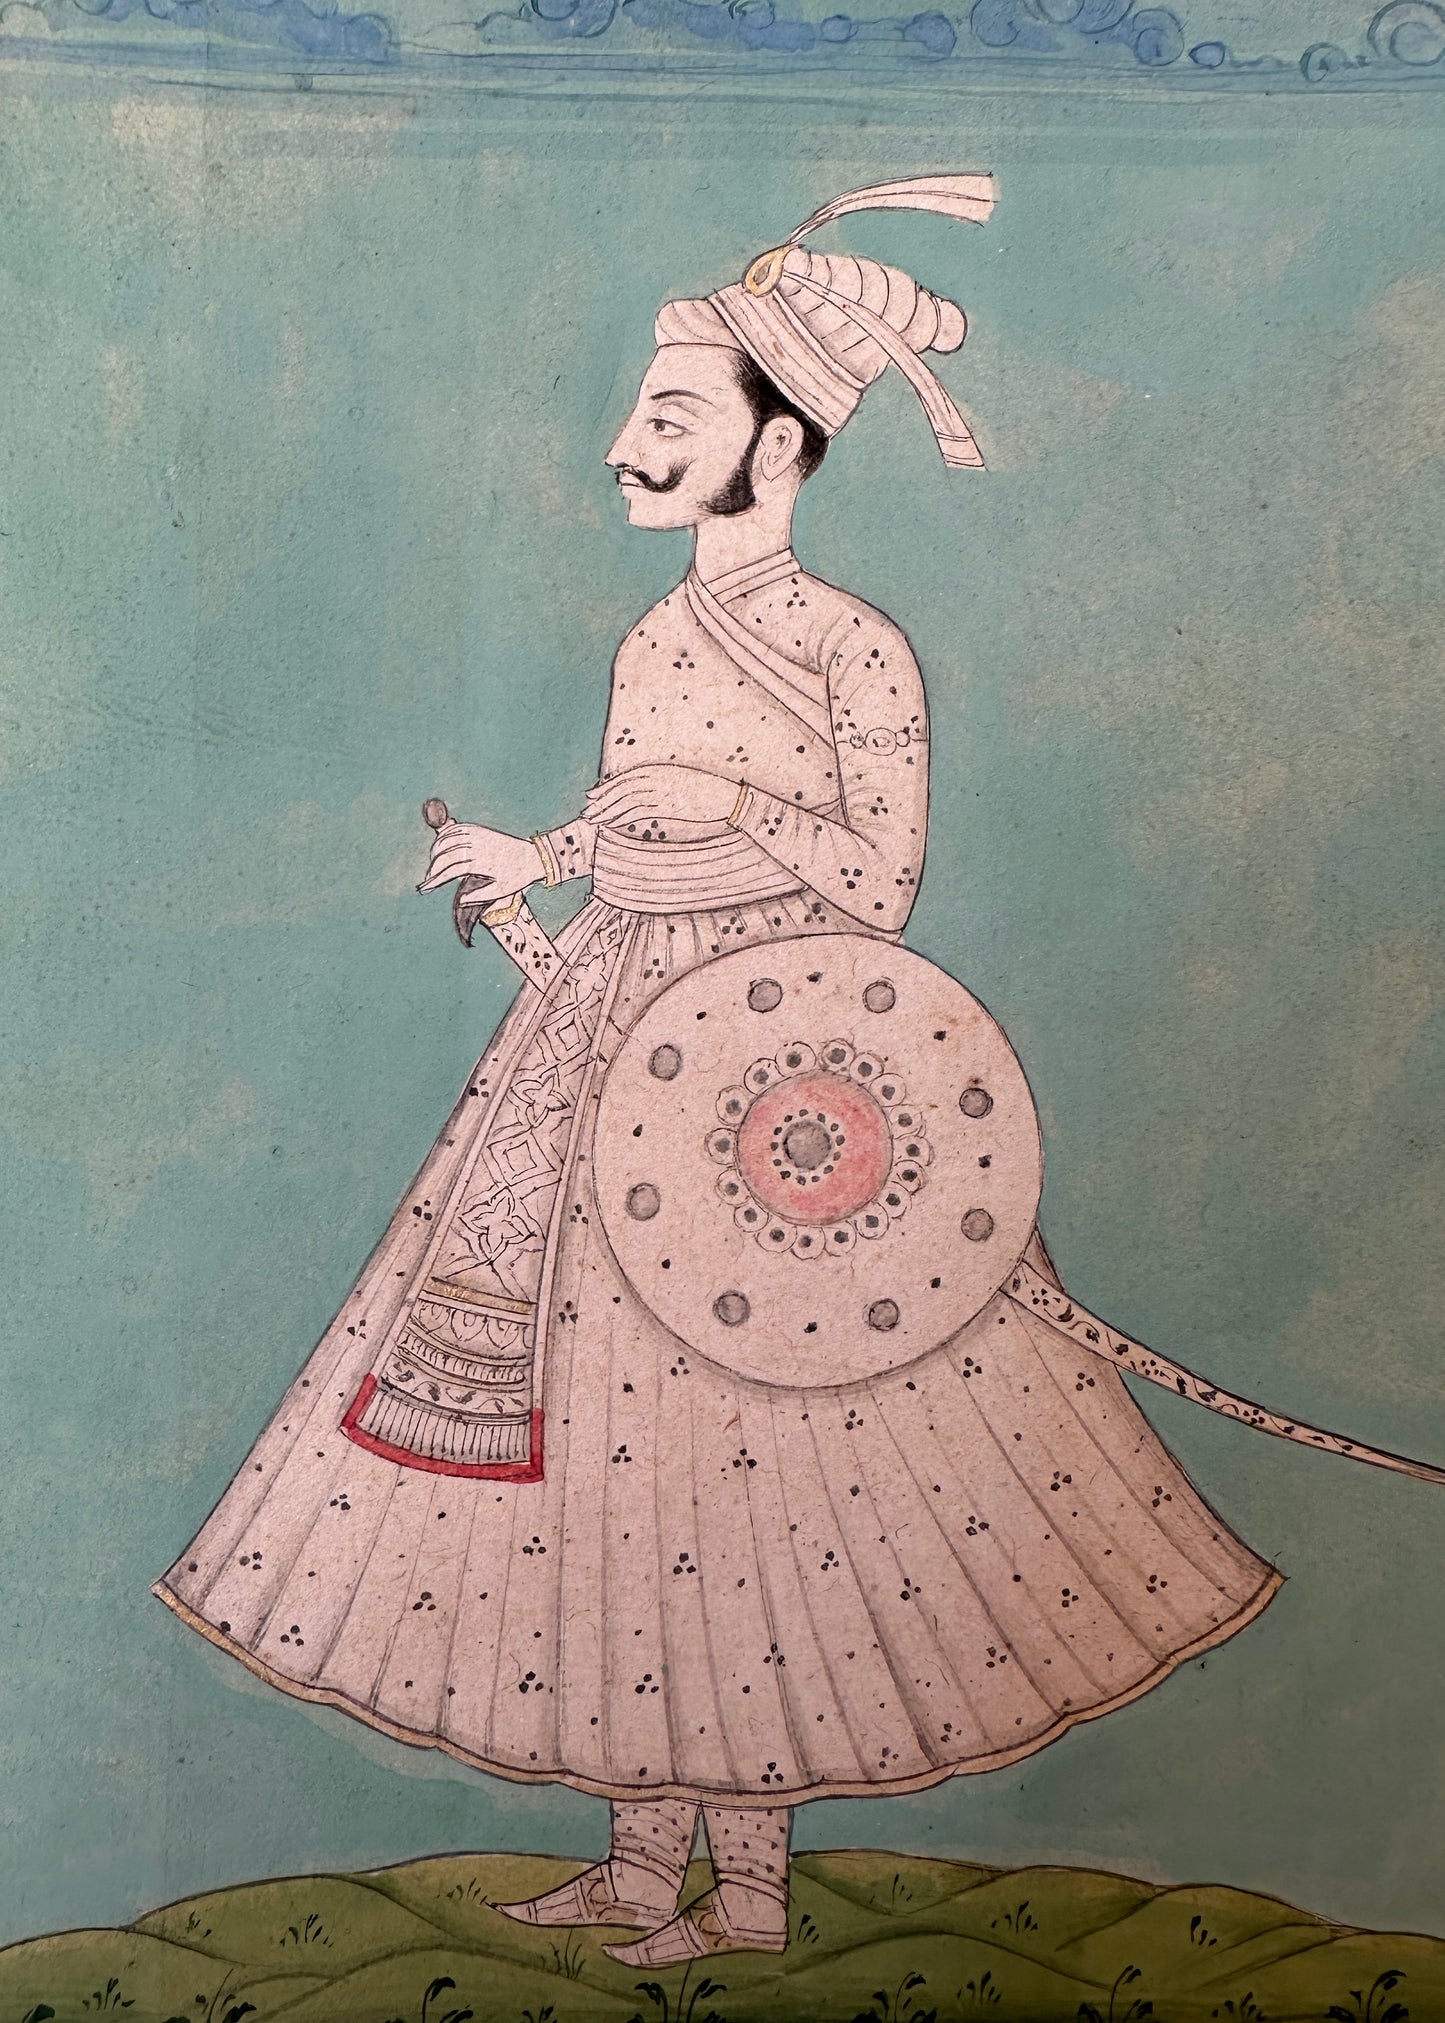 The Maharaja of Jaipur